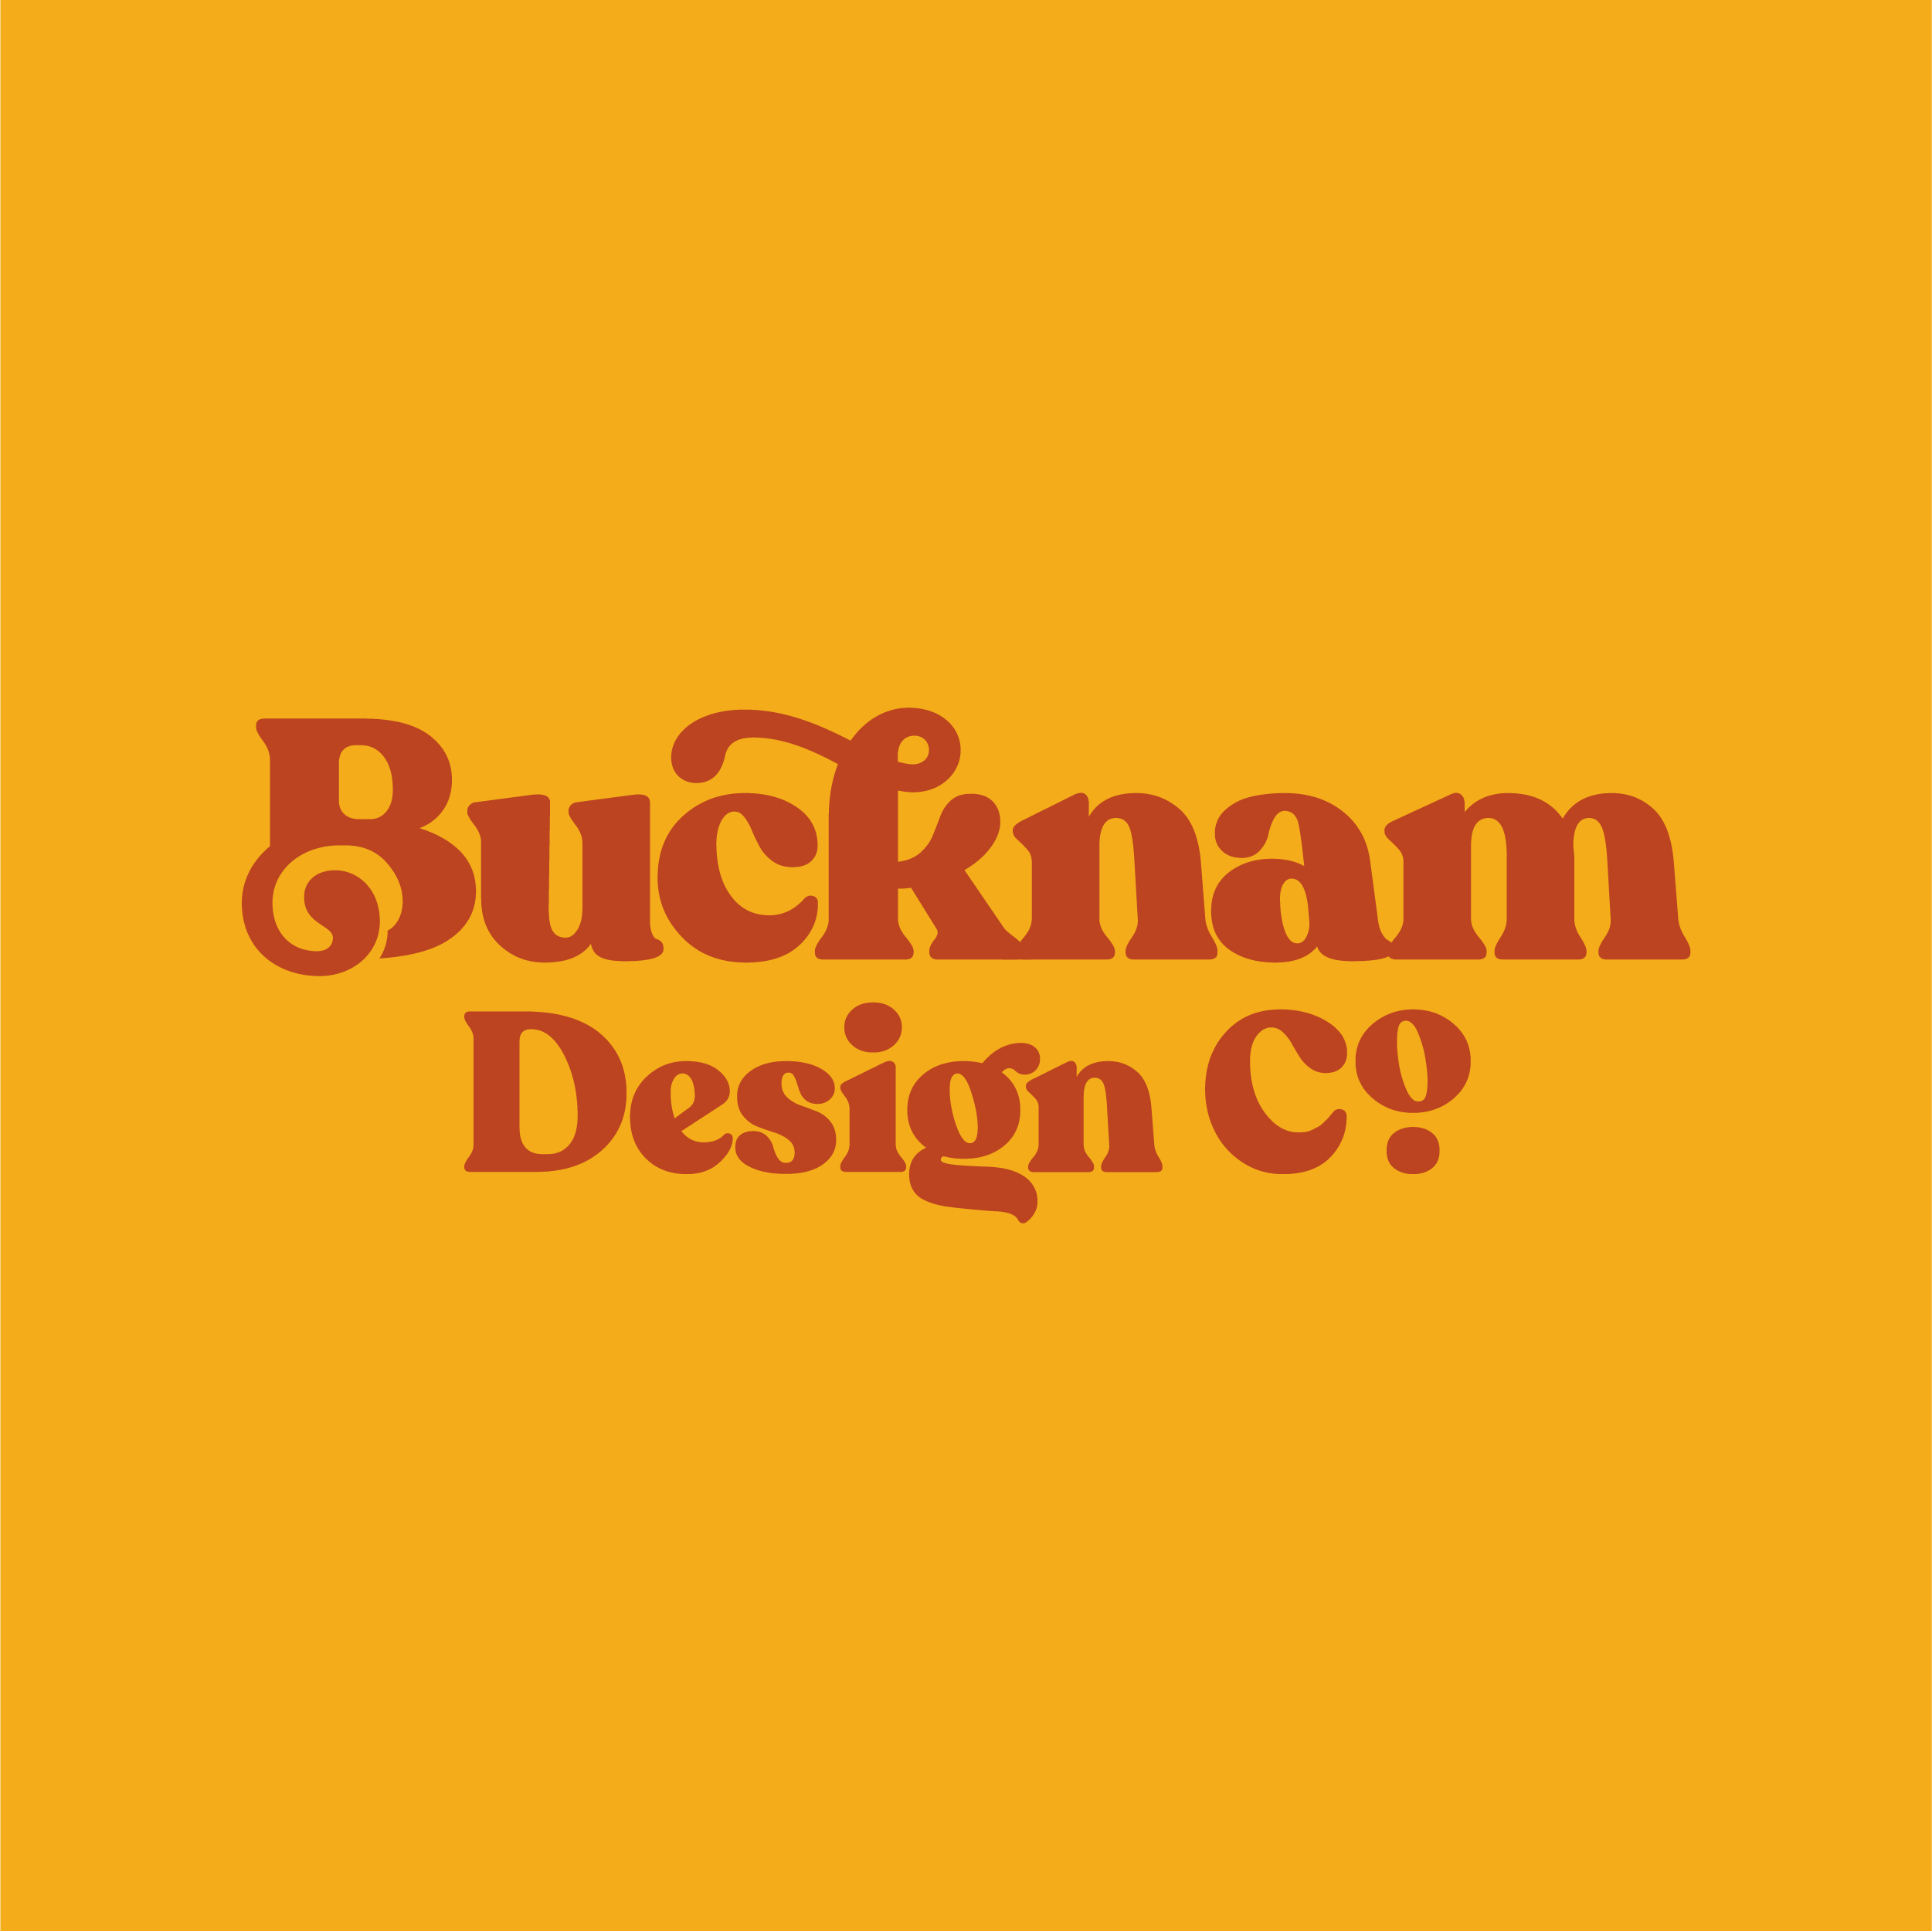 Bucknam Design Co.  on LogoLounge